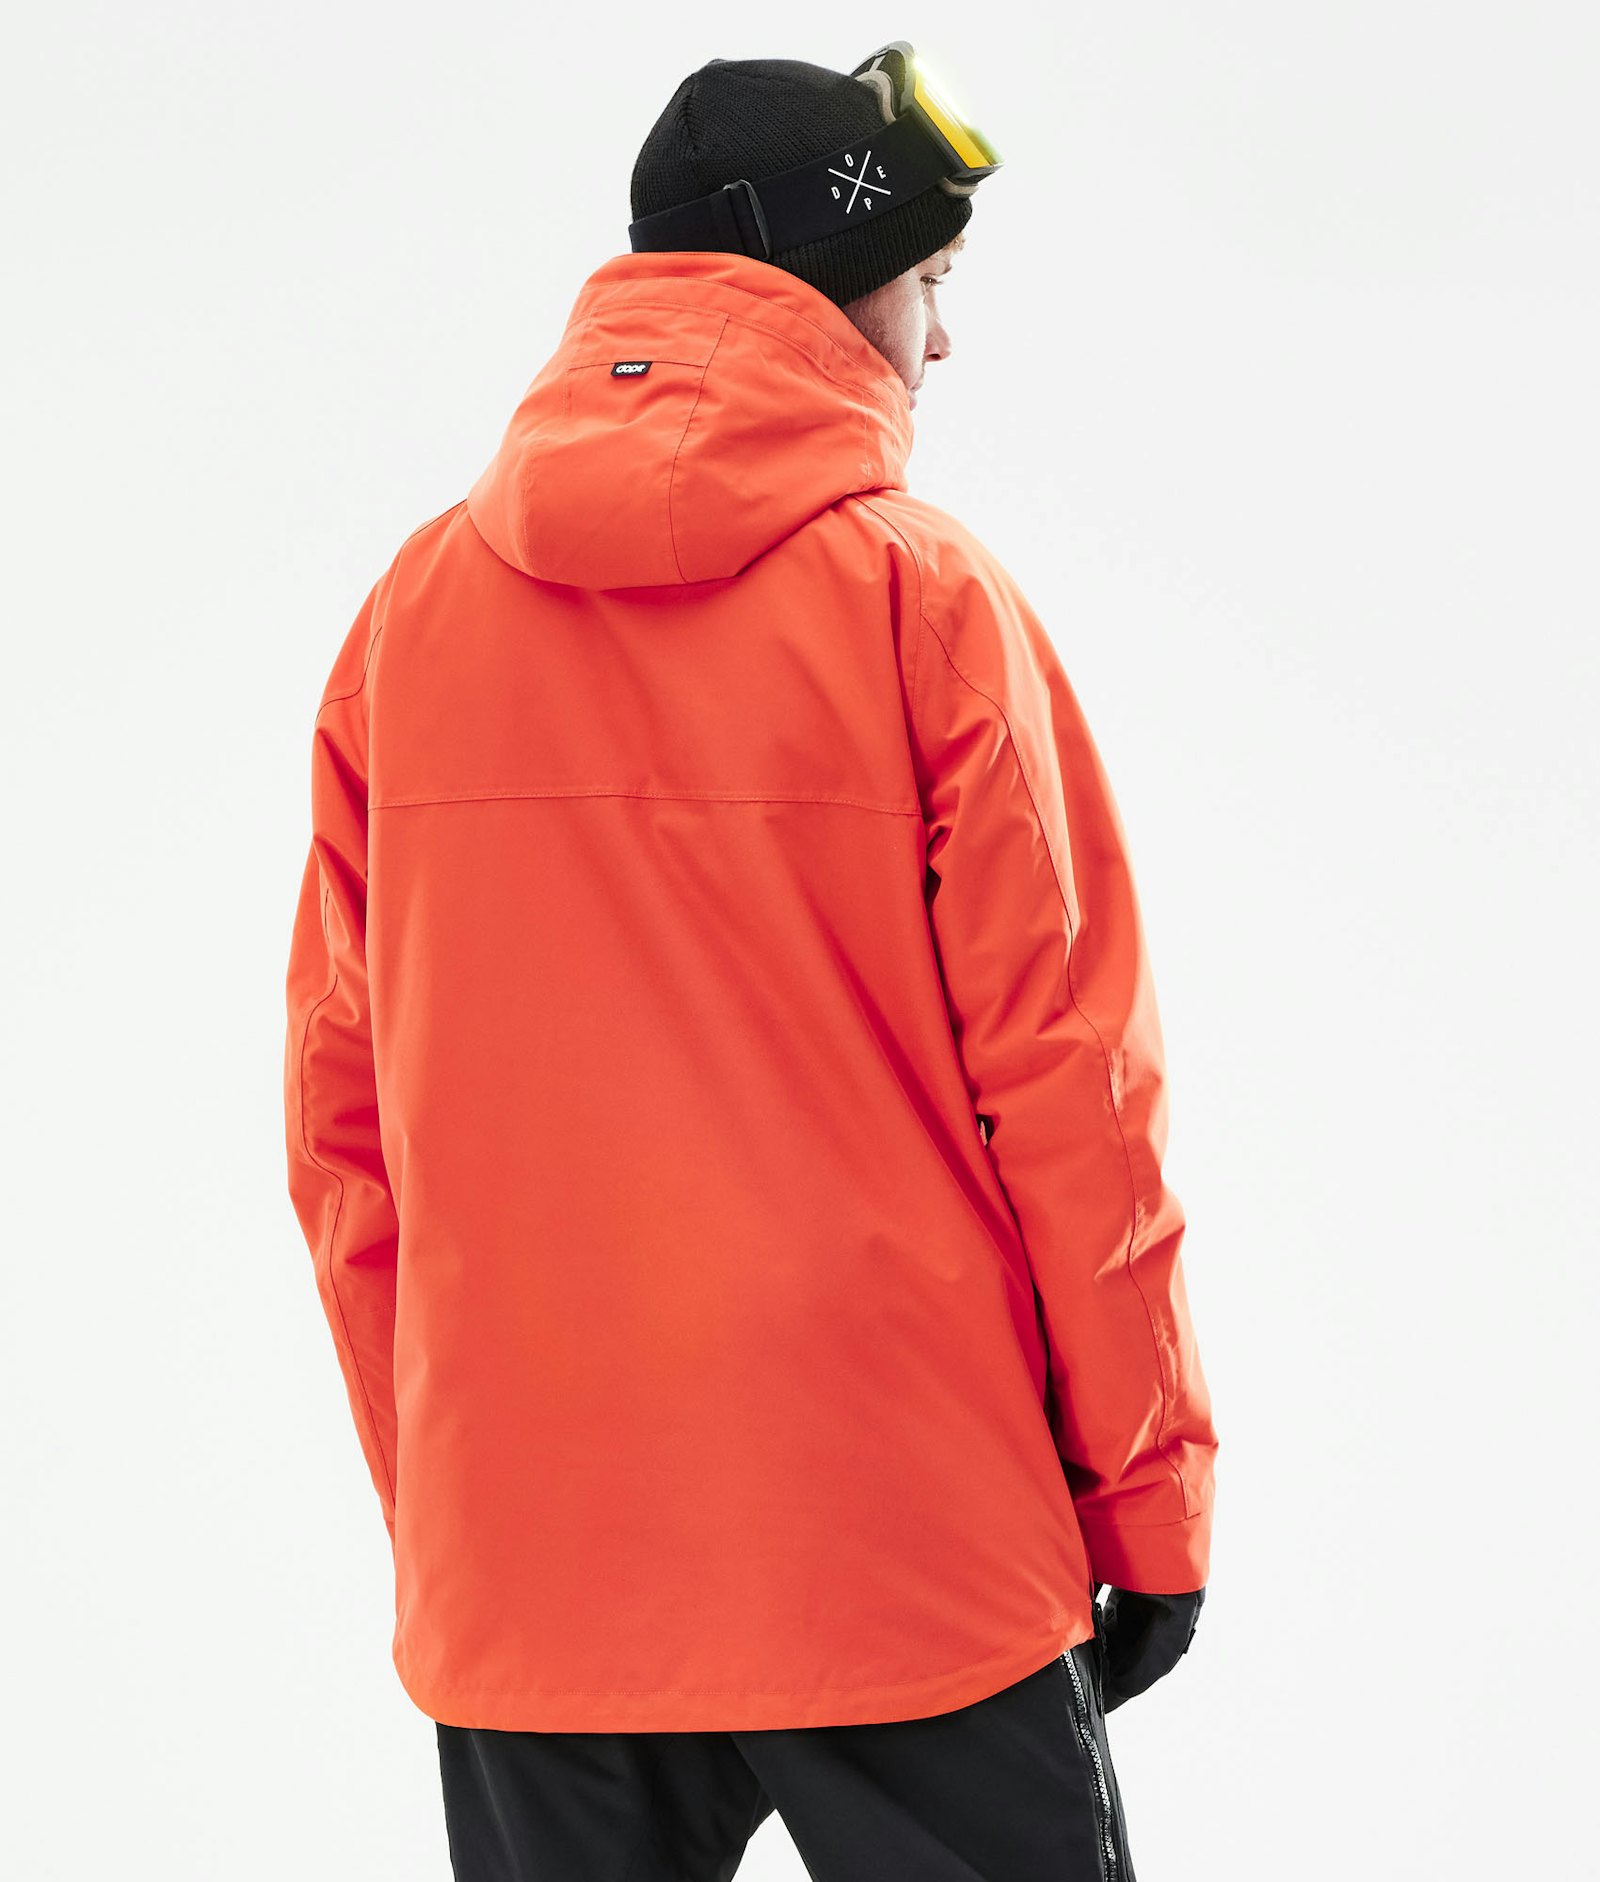 Akin 2021 Snowboard Jacket Men Orange